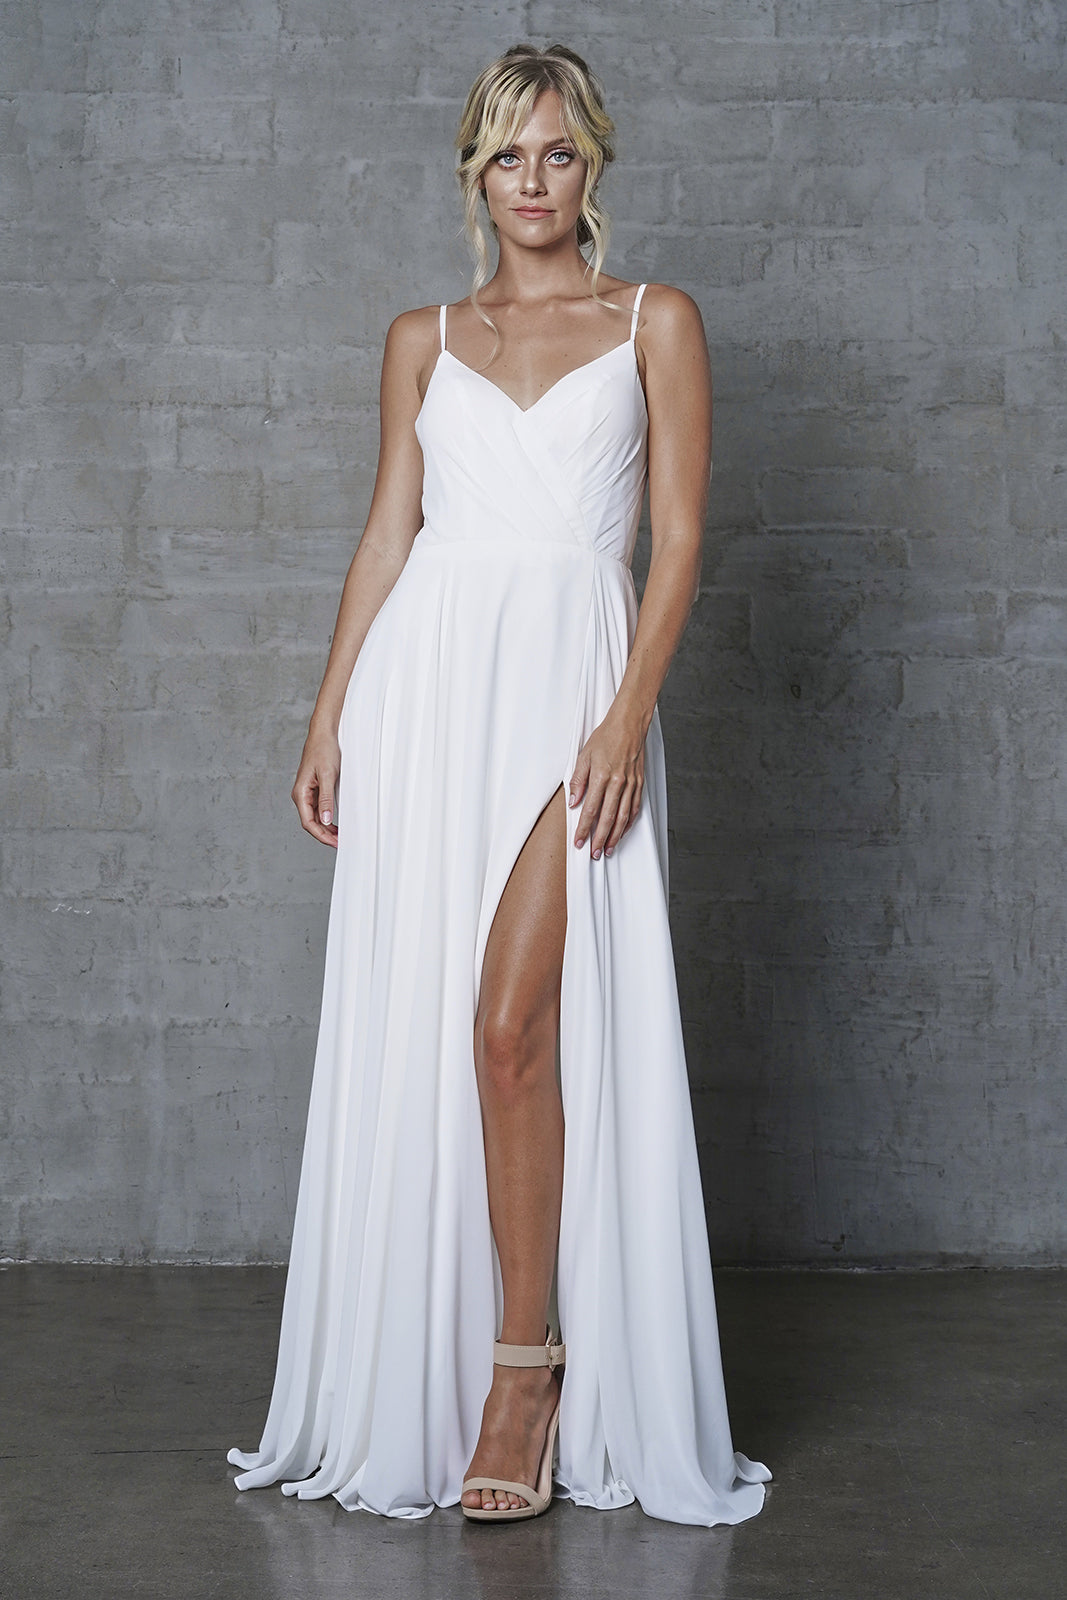 White Simple Chiffon Wedding Dress - LAA477B